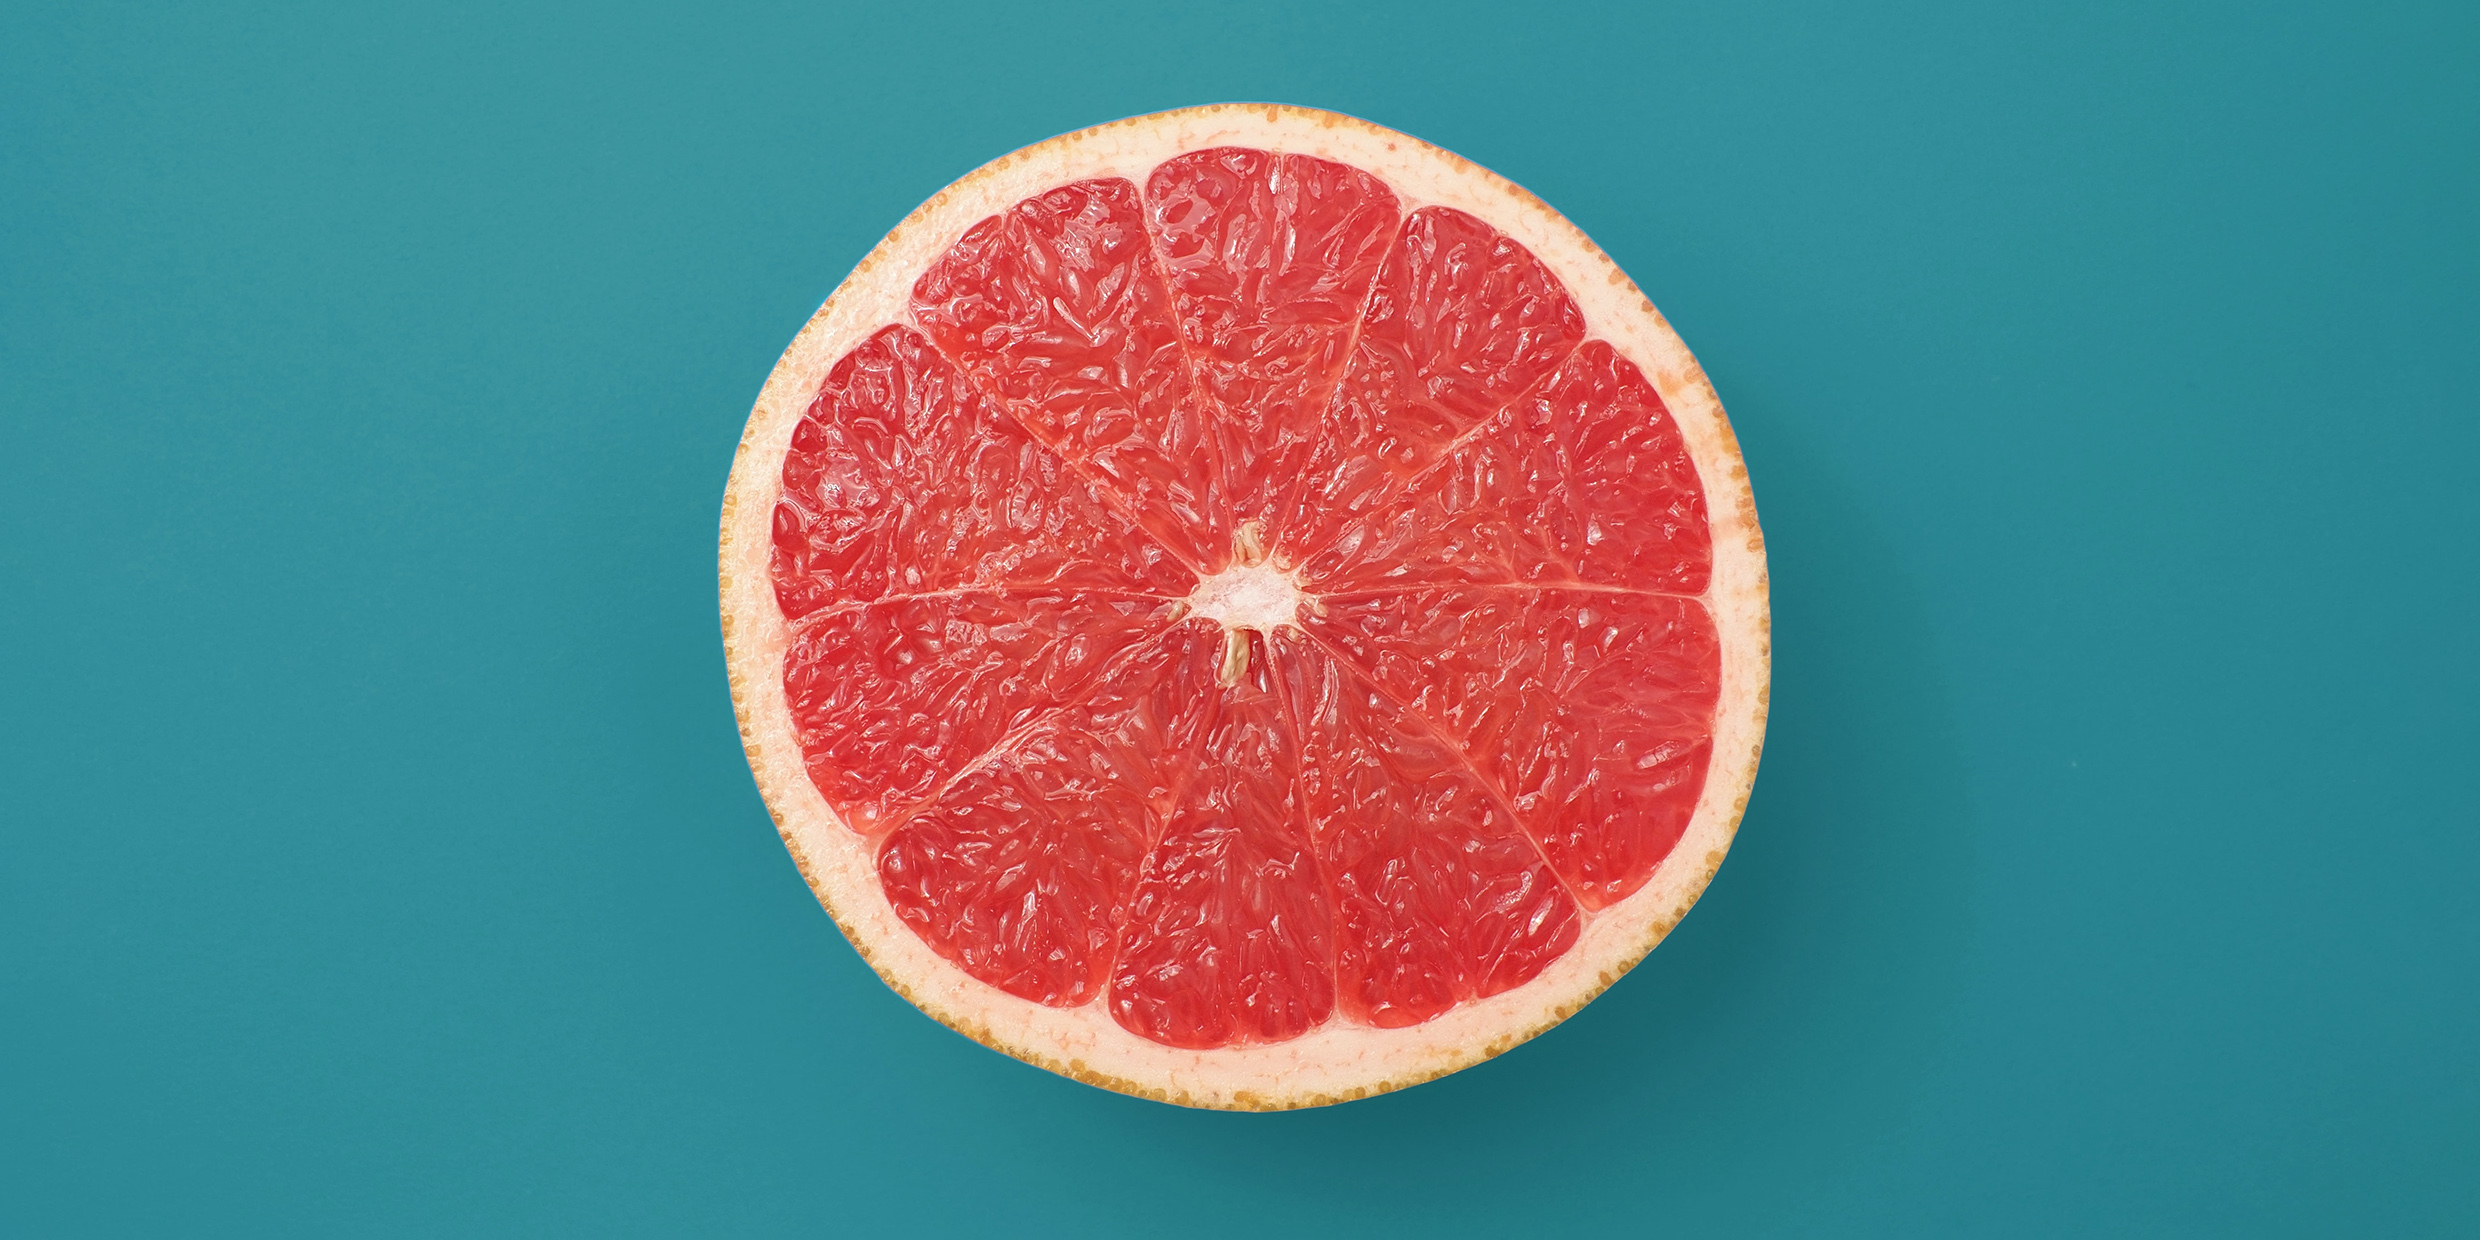 Image of a sliced piece of grapefruit